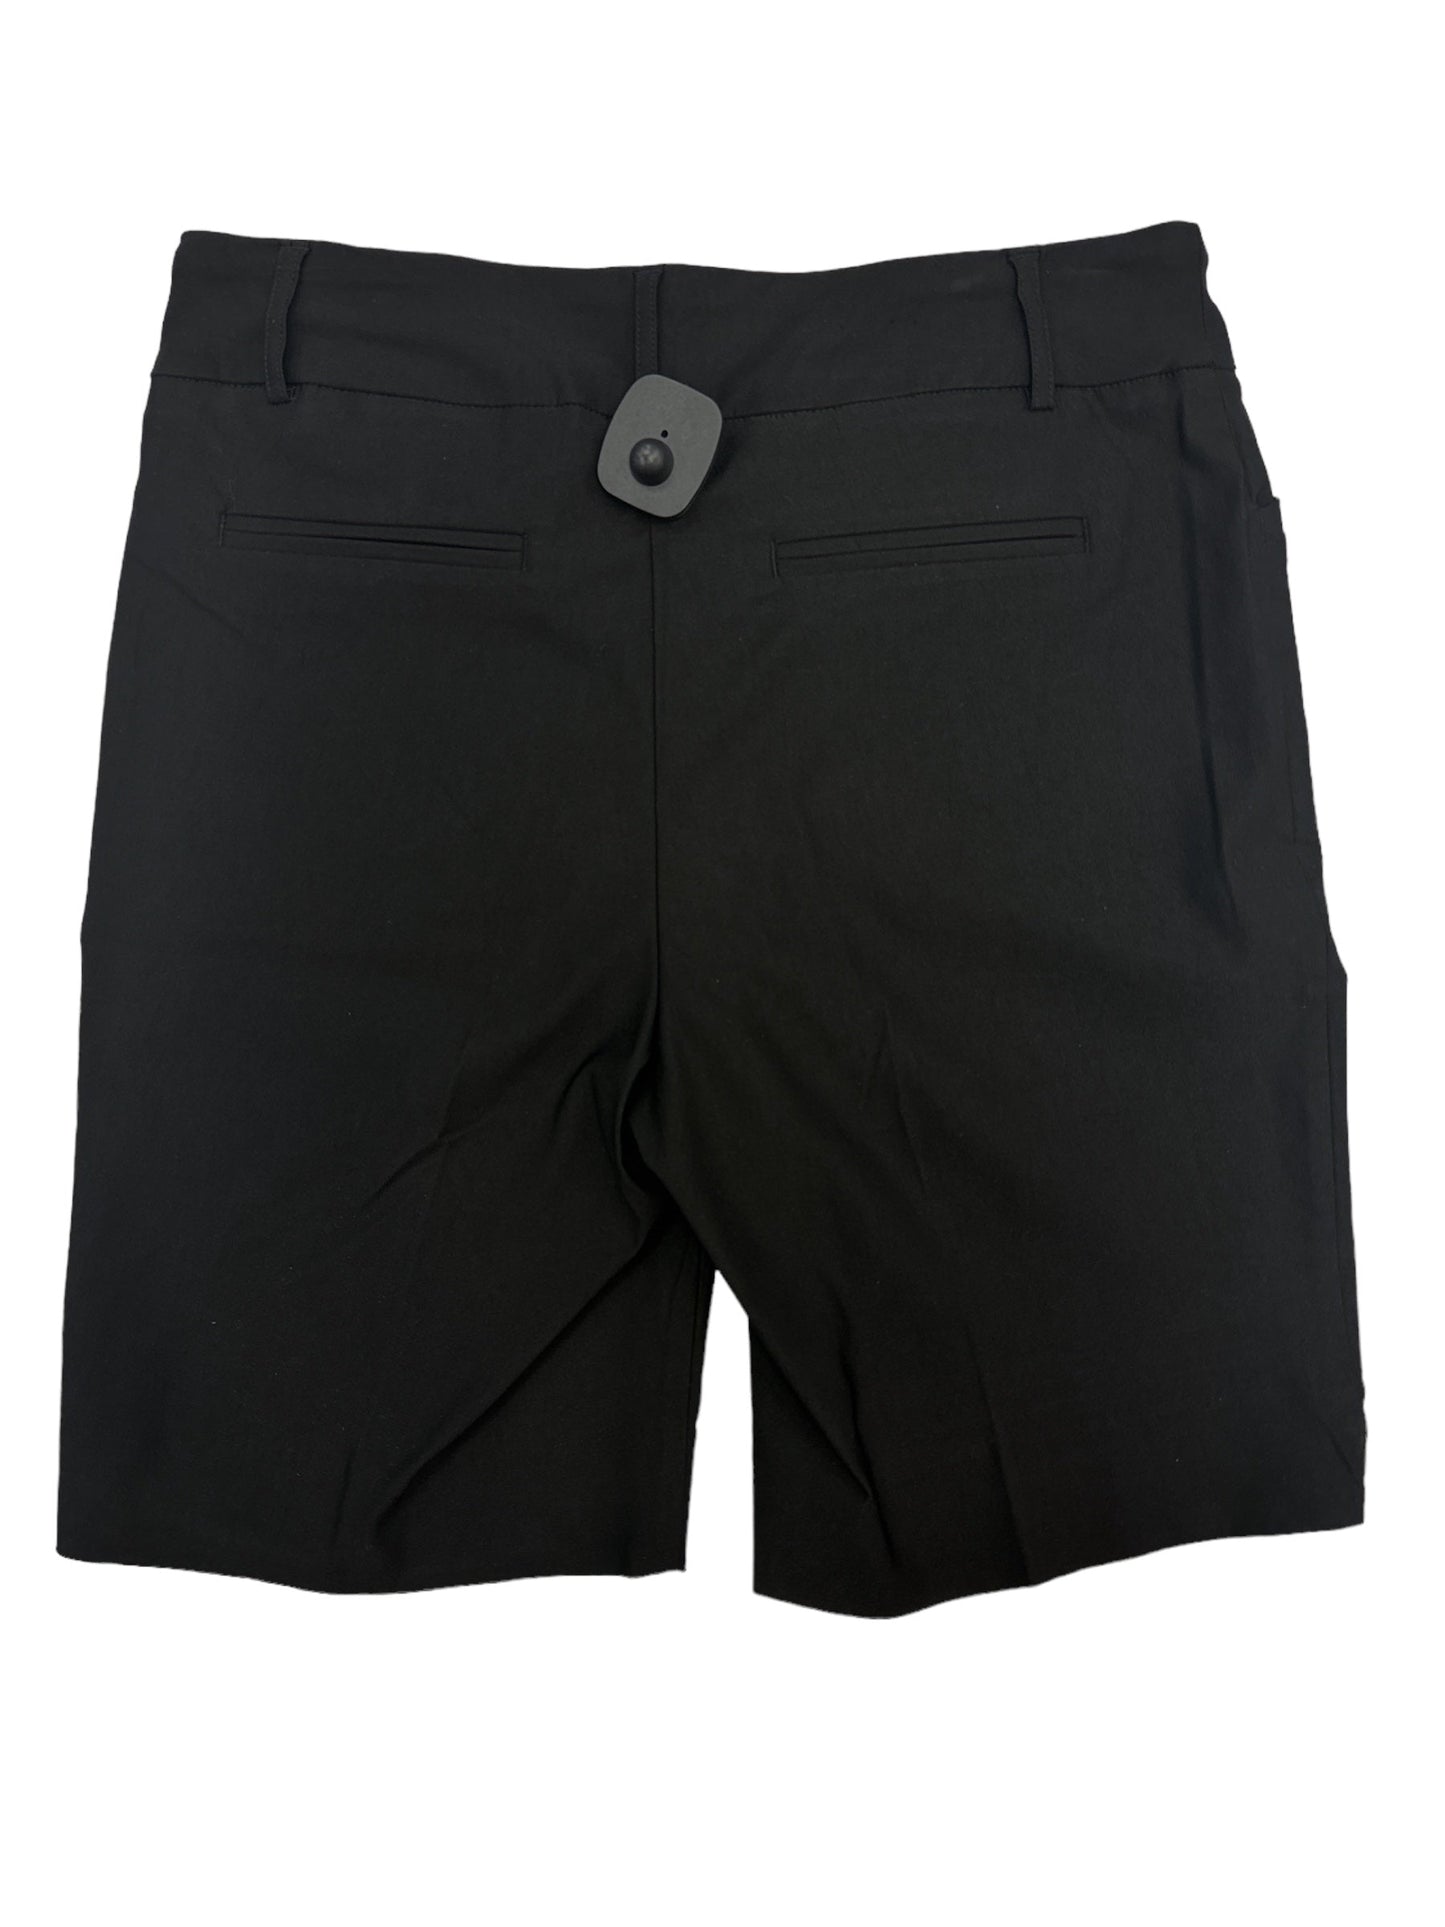 Shorts By Hilary Radley  Size: 6